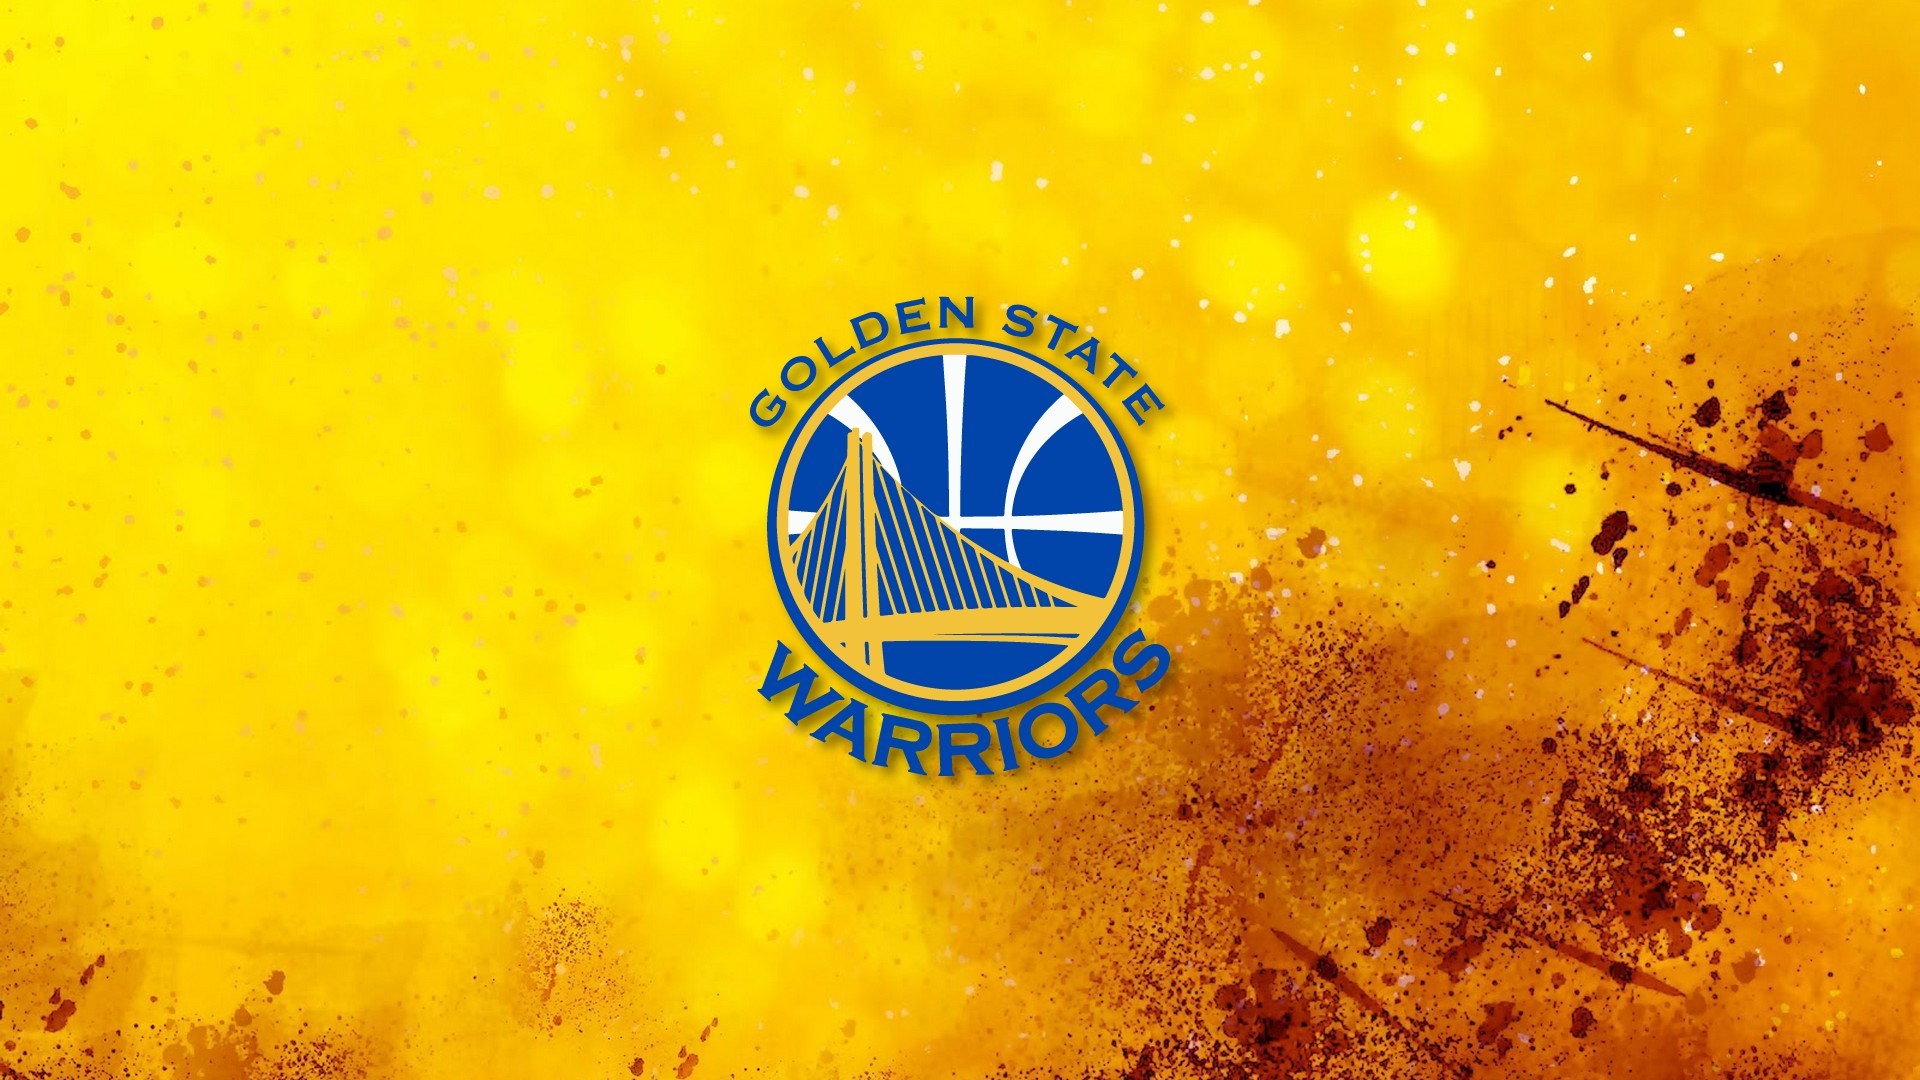 Golden State Warriors HD wallpapers free download  Wallpaperbetter